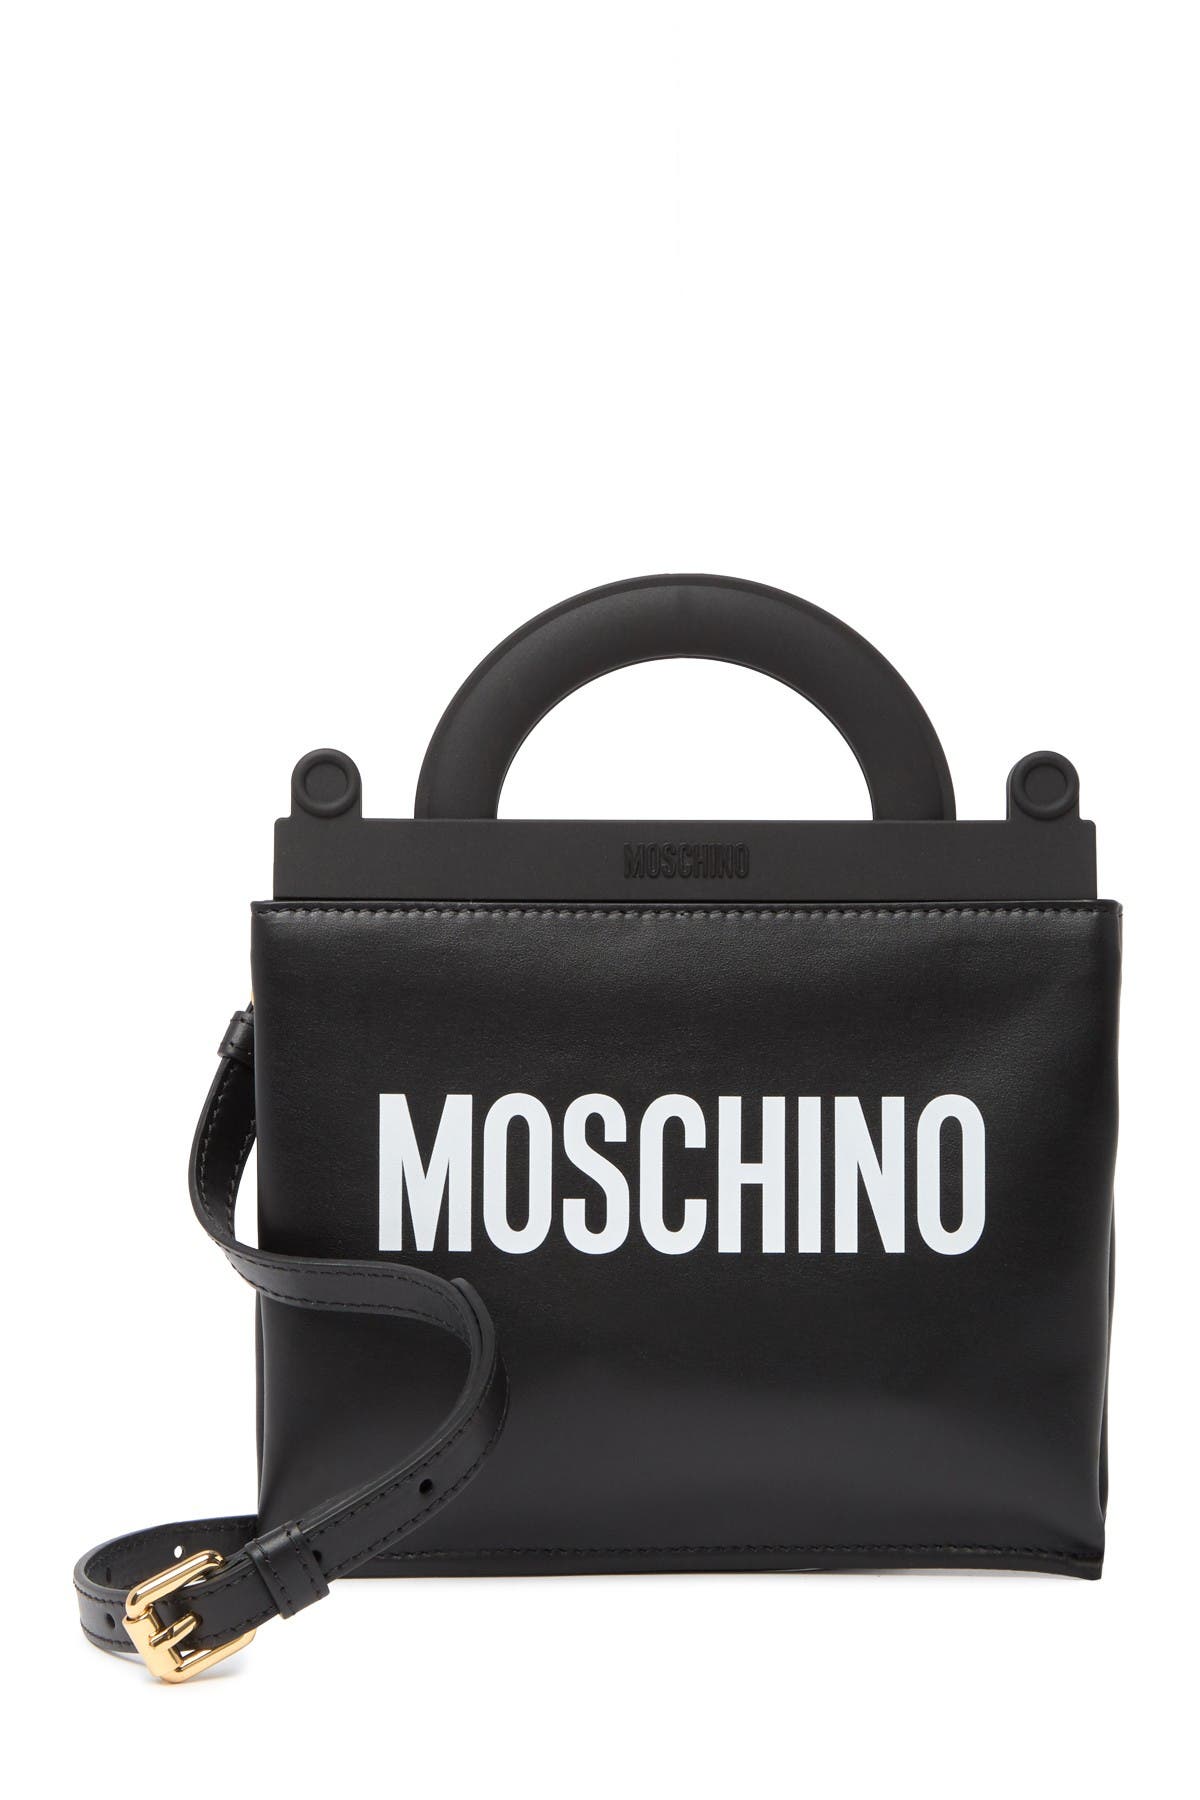 moschino leather crossbody bag